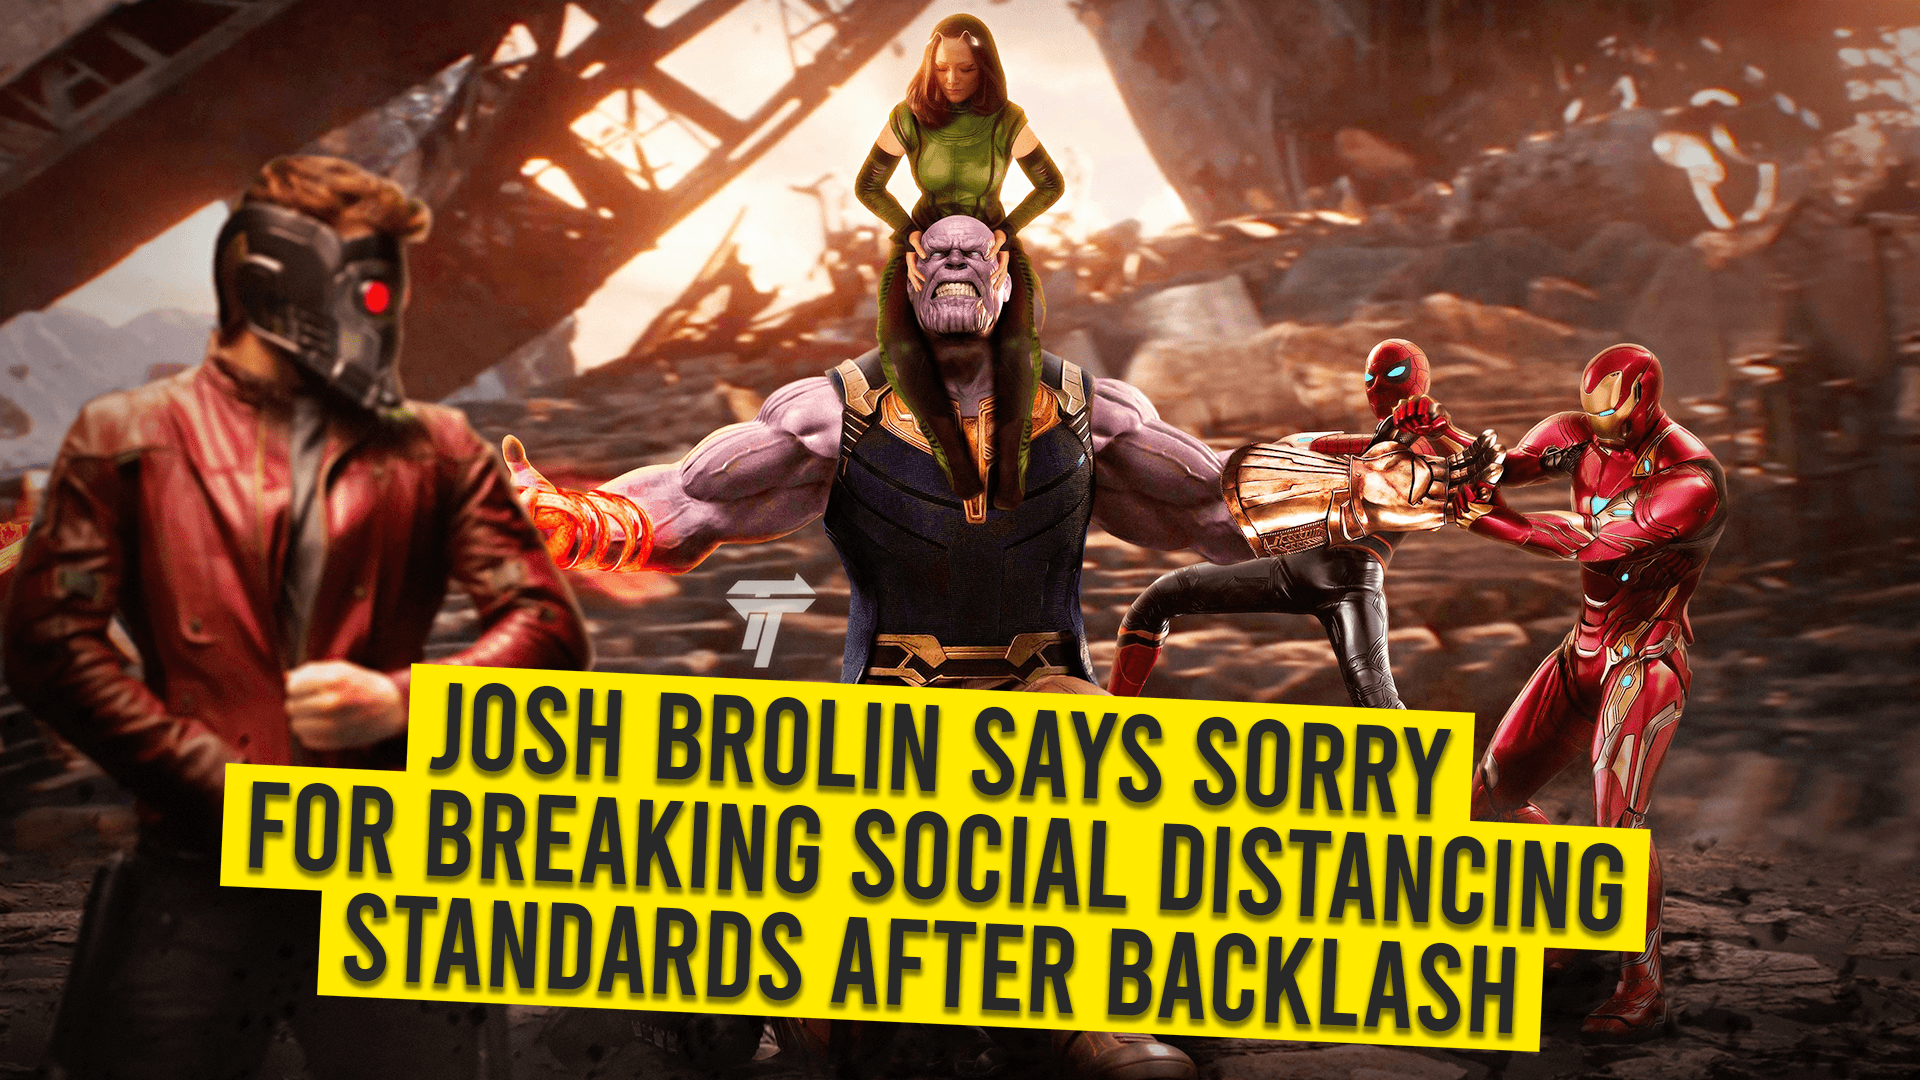 Josh Brolin Says Sorry For Breaking Social Distancing Standards After Backlash